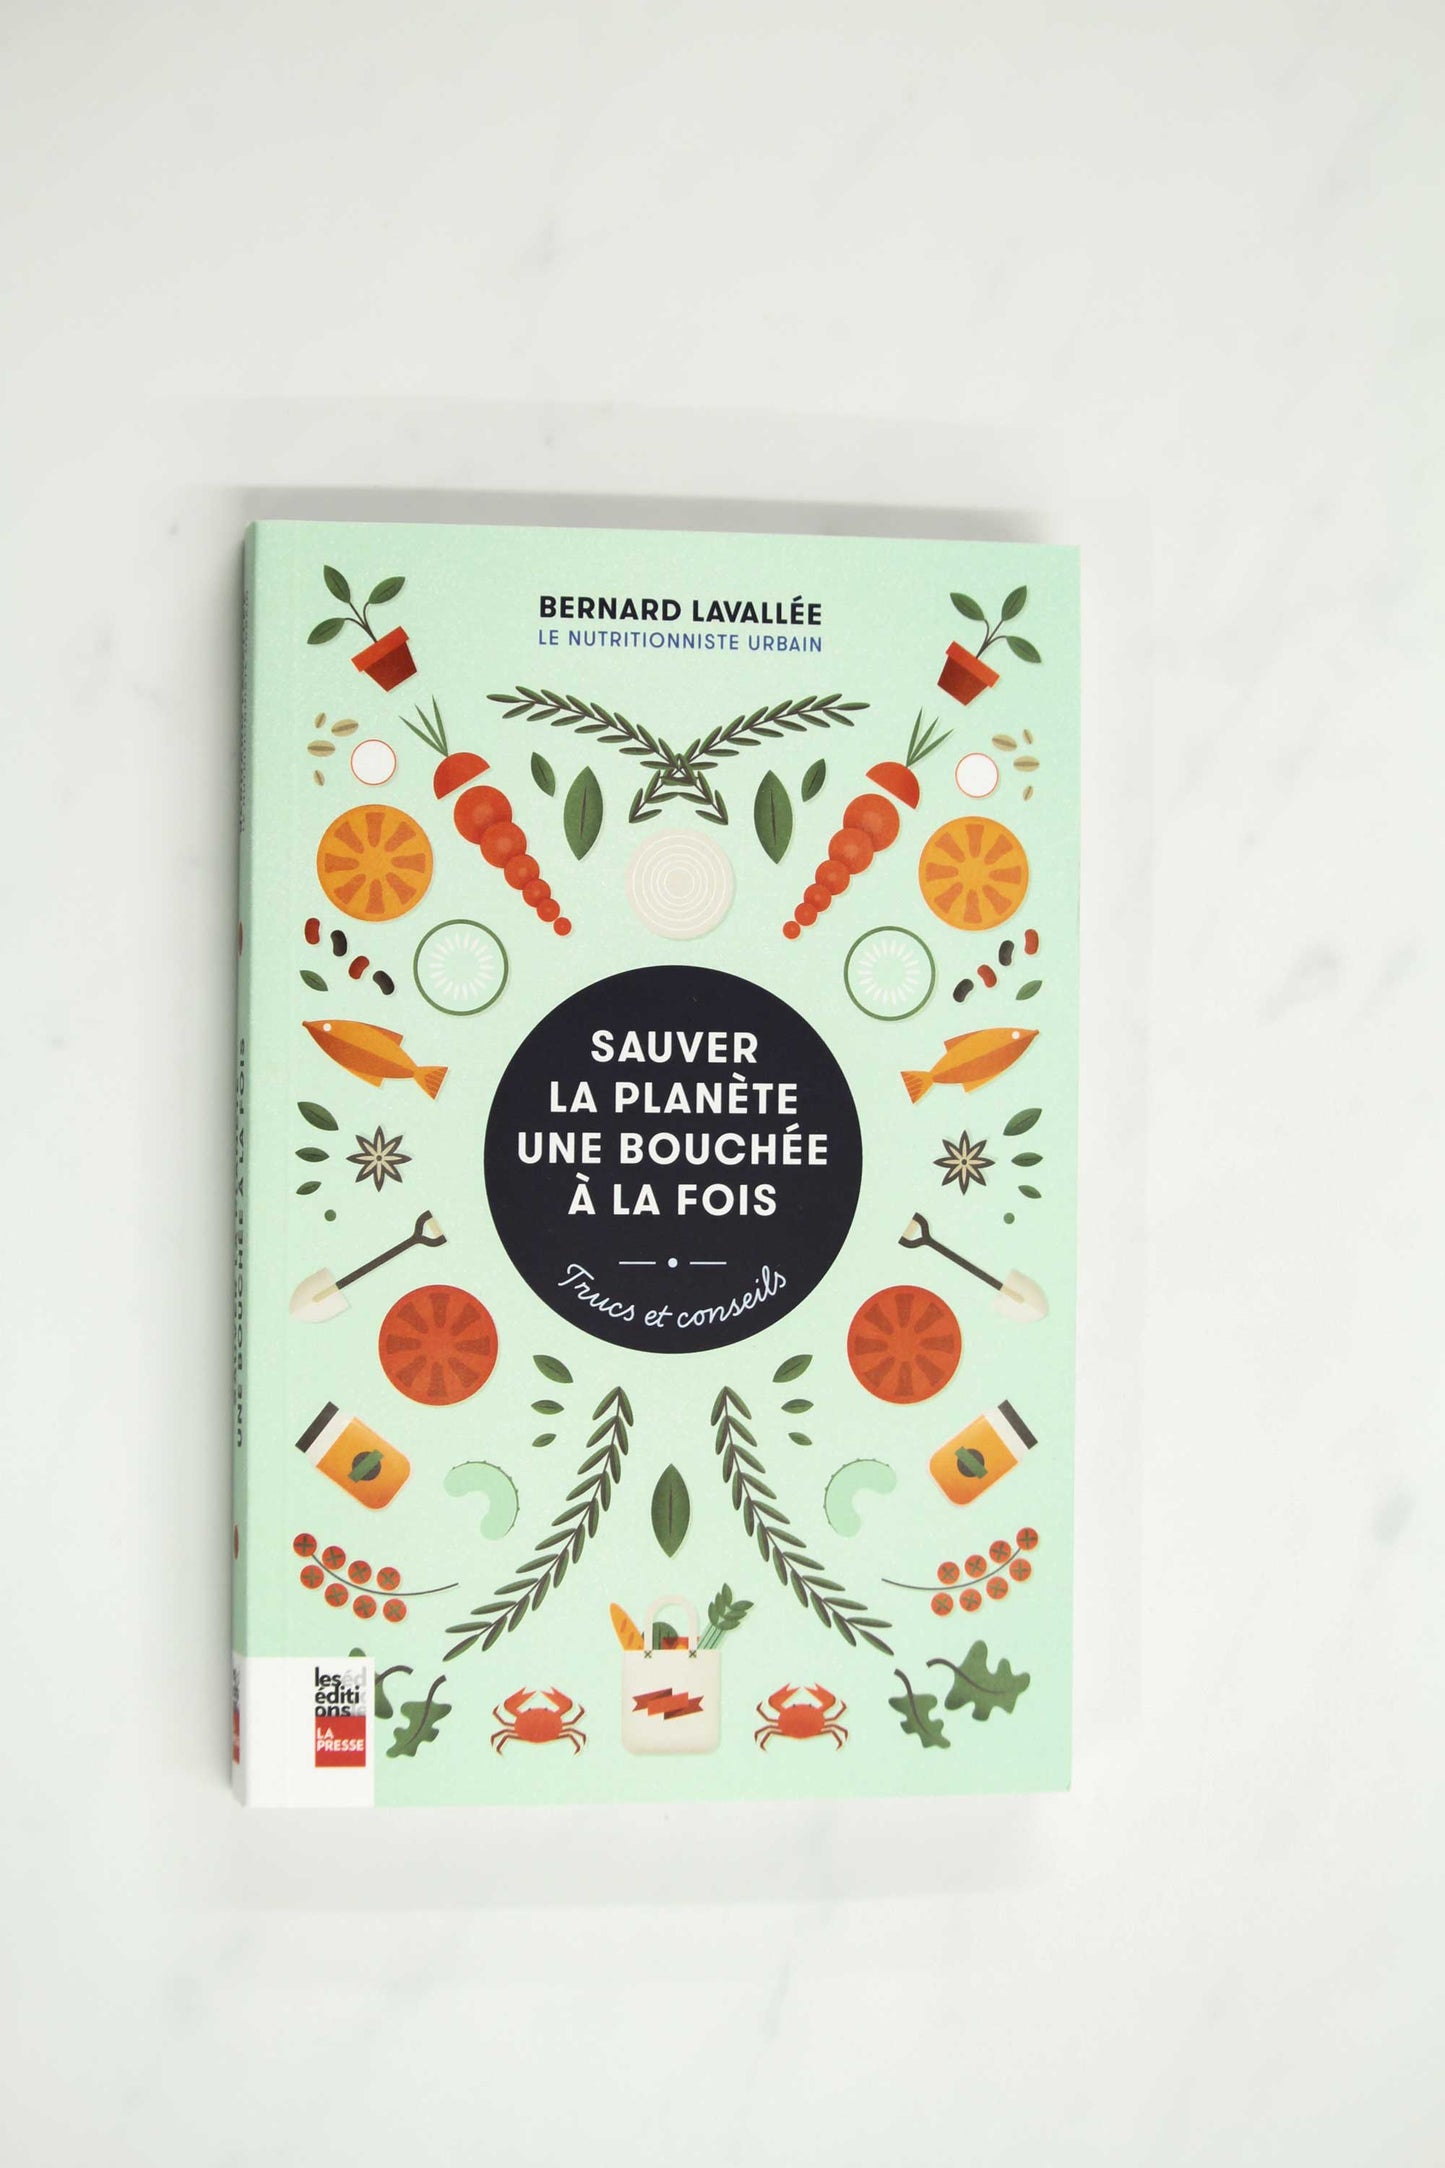 Sauver la planète une bouchée à la fois green book cover with illustration of carrots, fish, tomatoes, and herbs